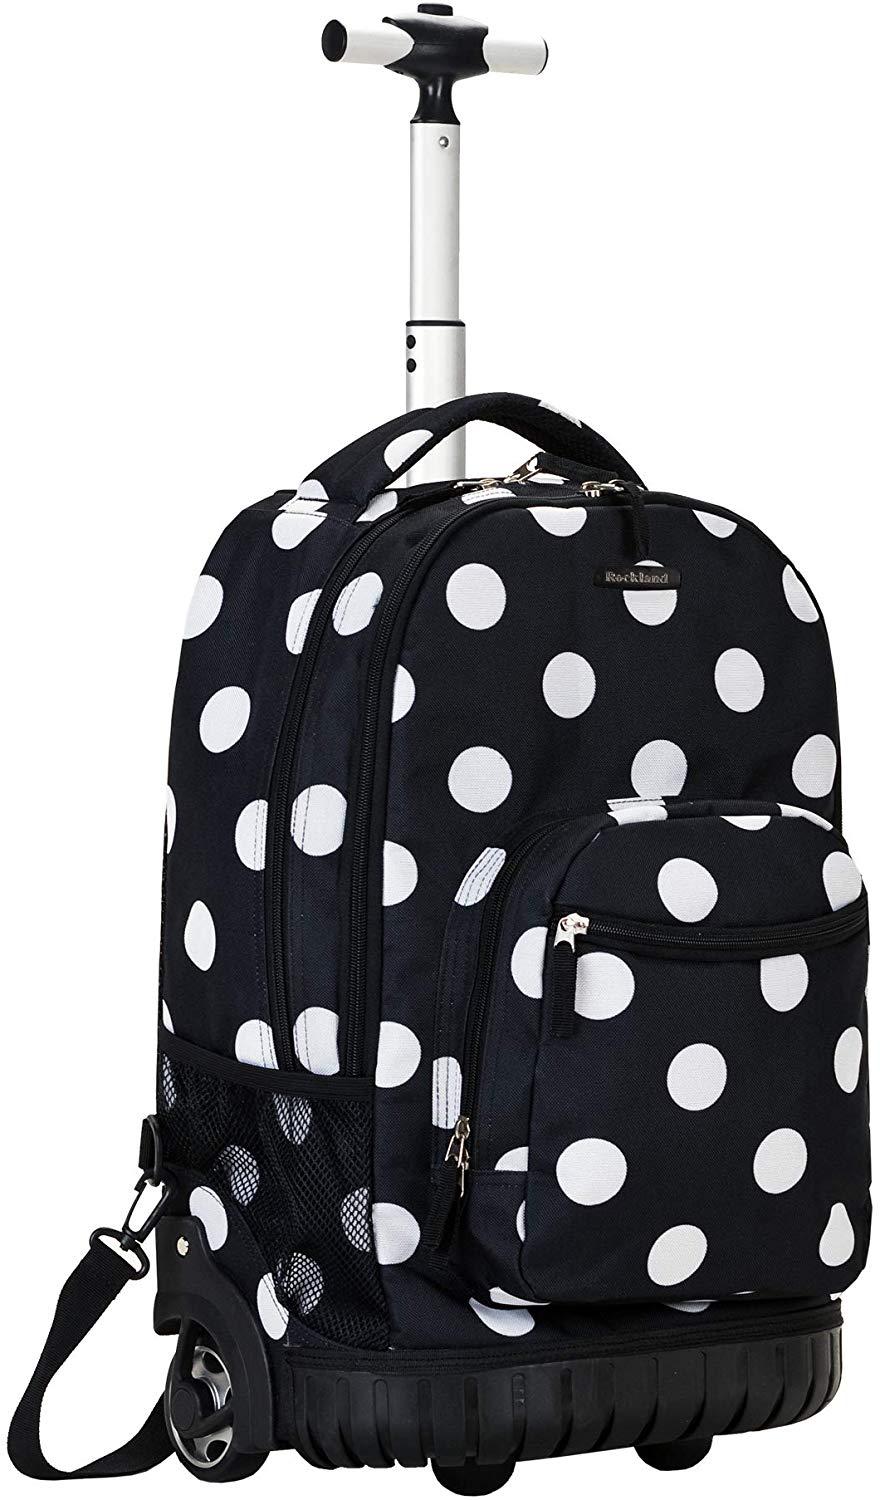 Rockland Luggage 19 Inch Rolling Backpack Printed, Black Dot, Medium